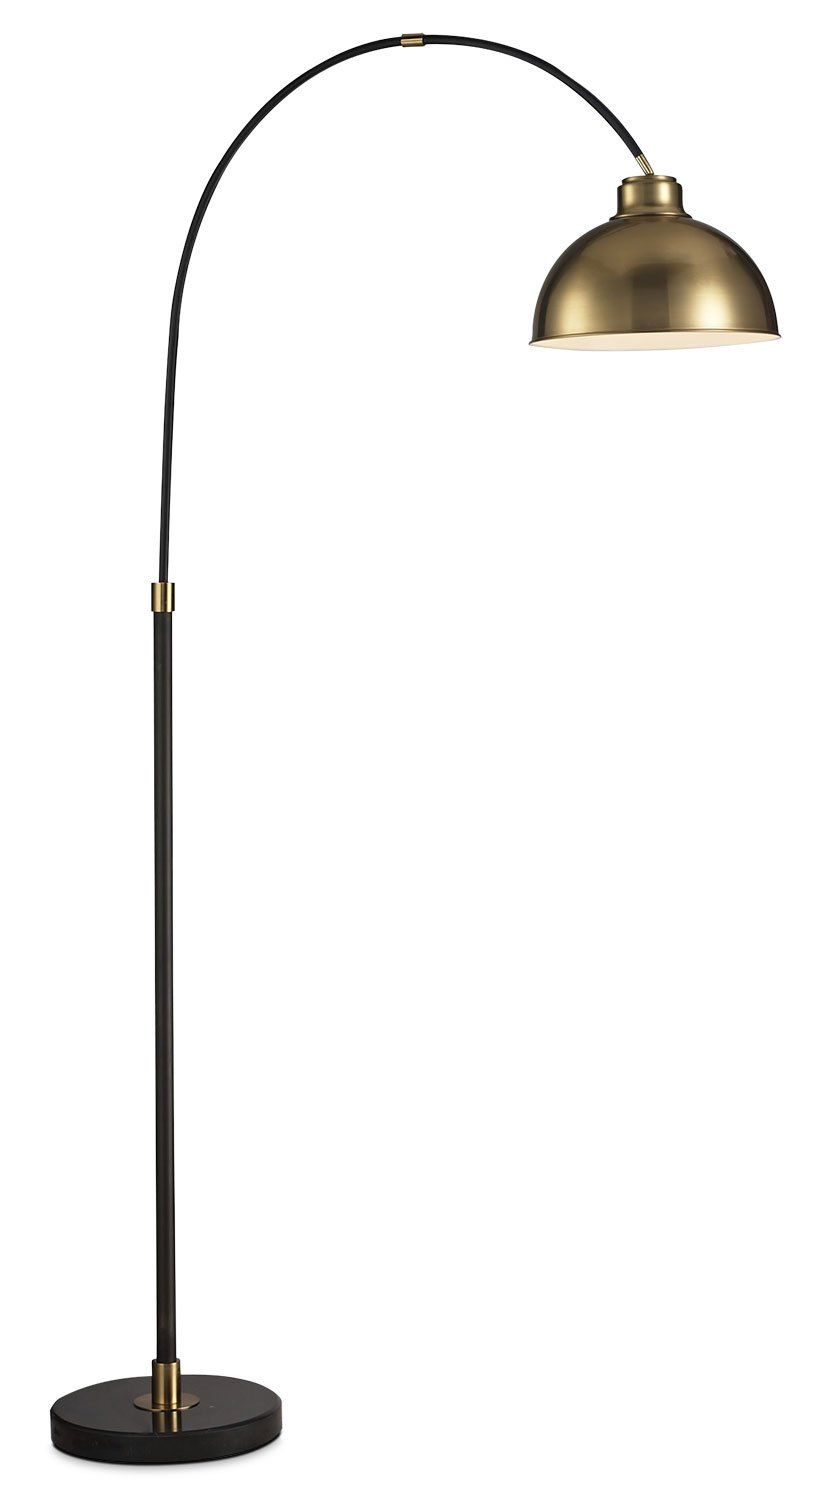 Black Arc Floor Lamp With Gold Metal Shade In 2019 Arc regarding size 831 X 1500